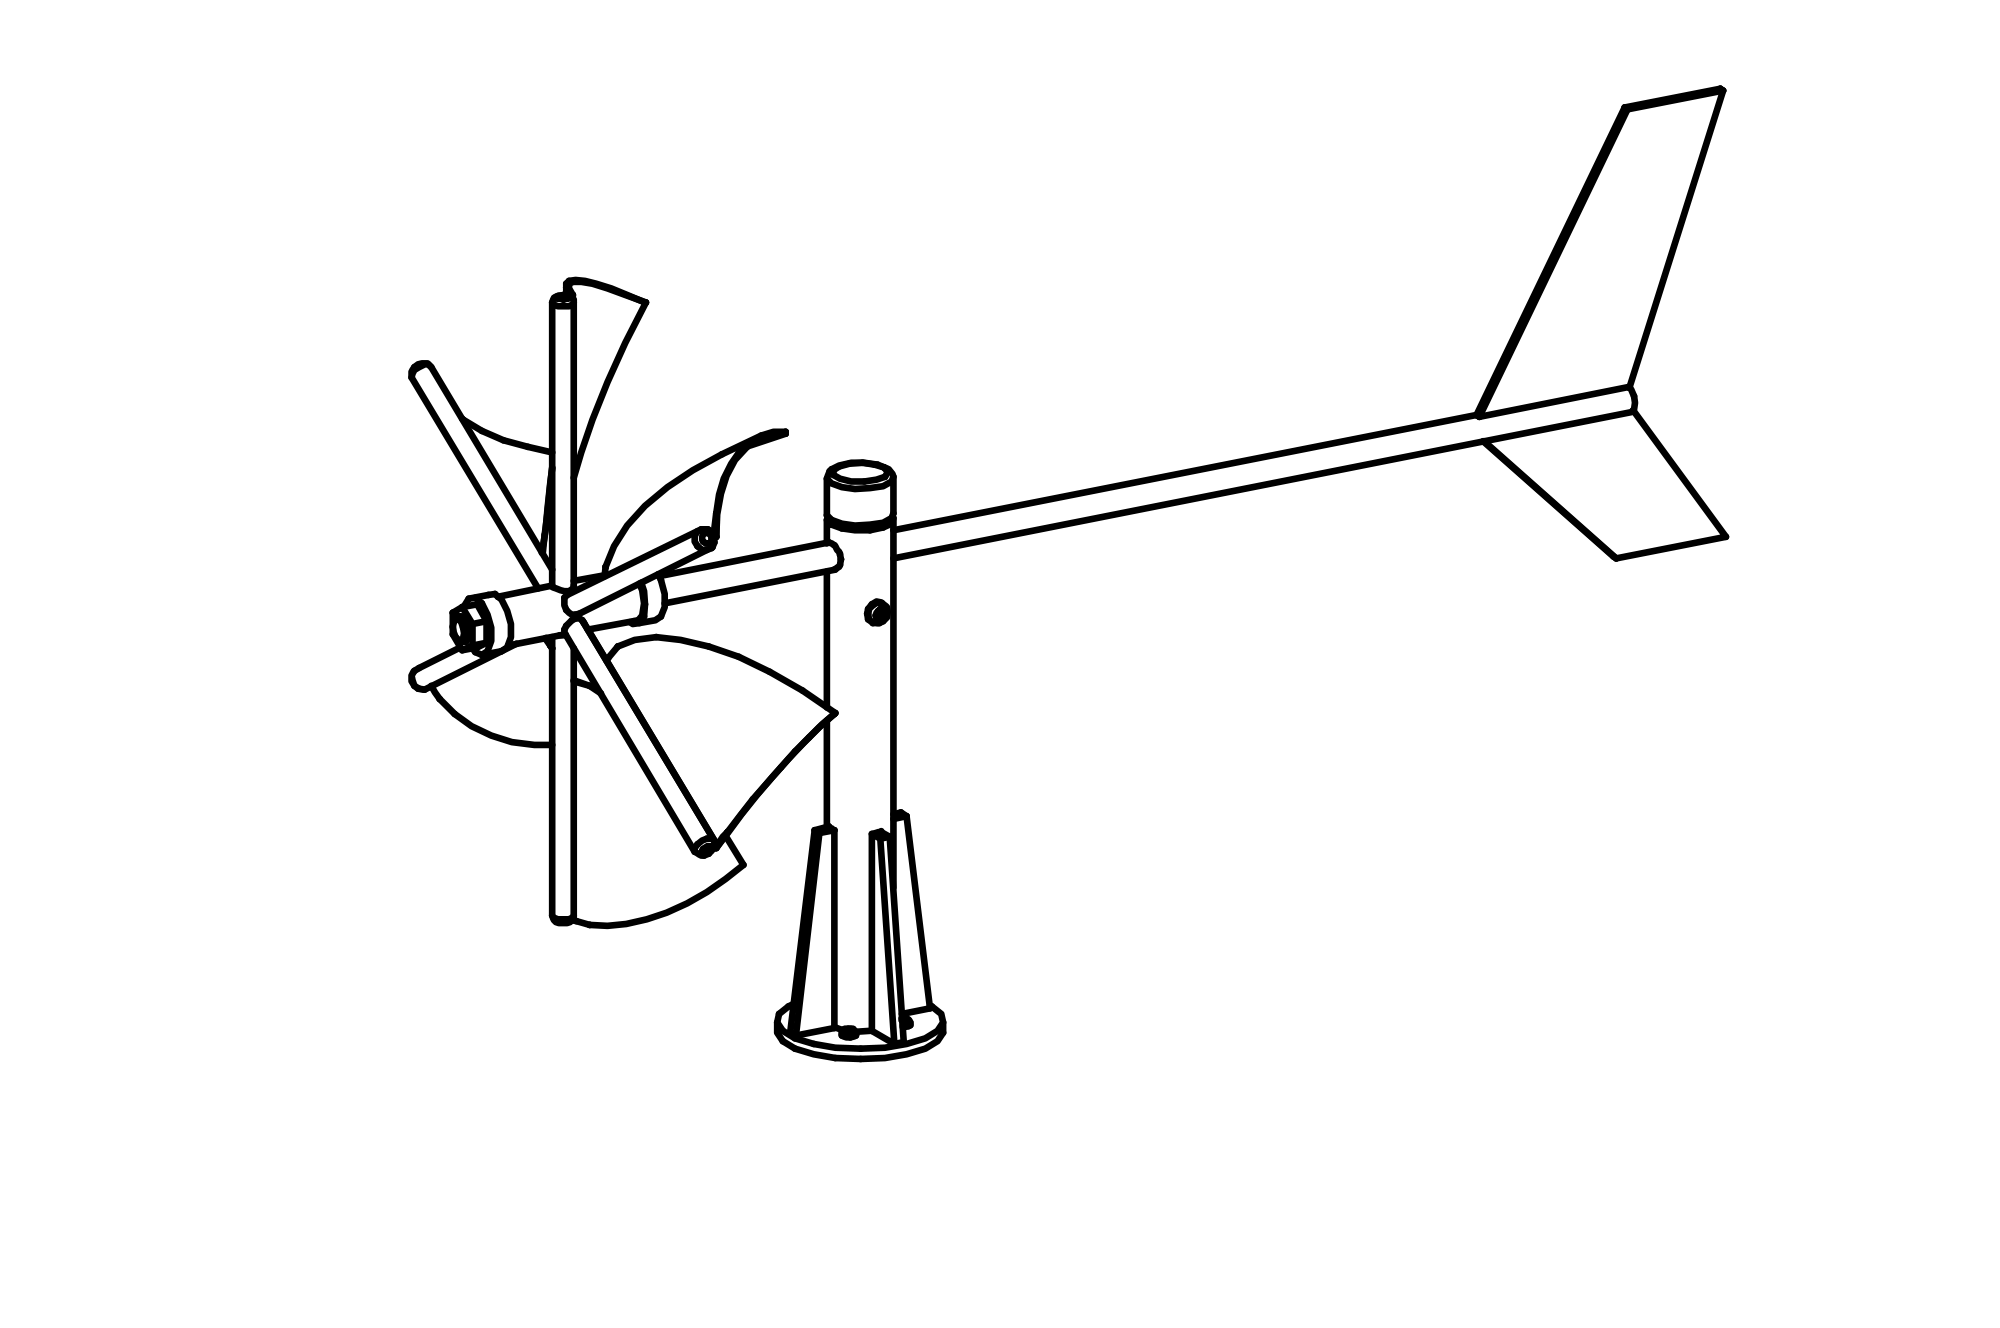 Six-Fan Windmill for attachment